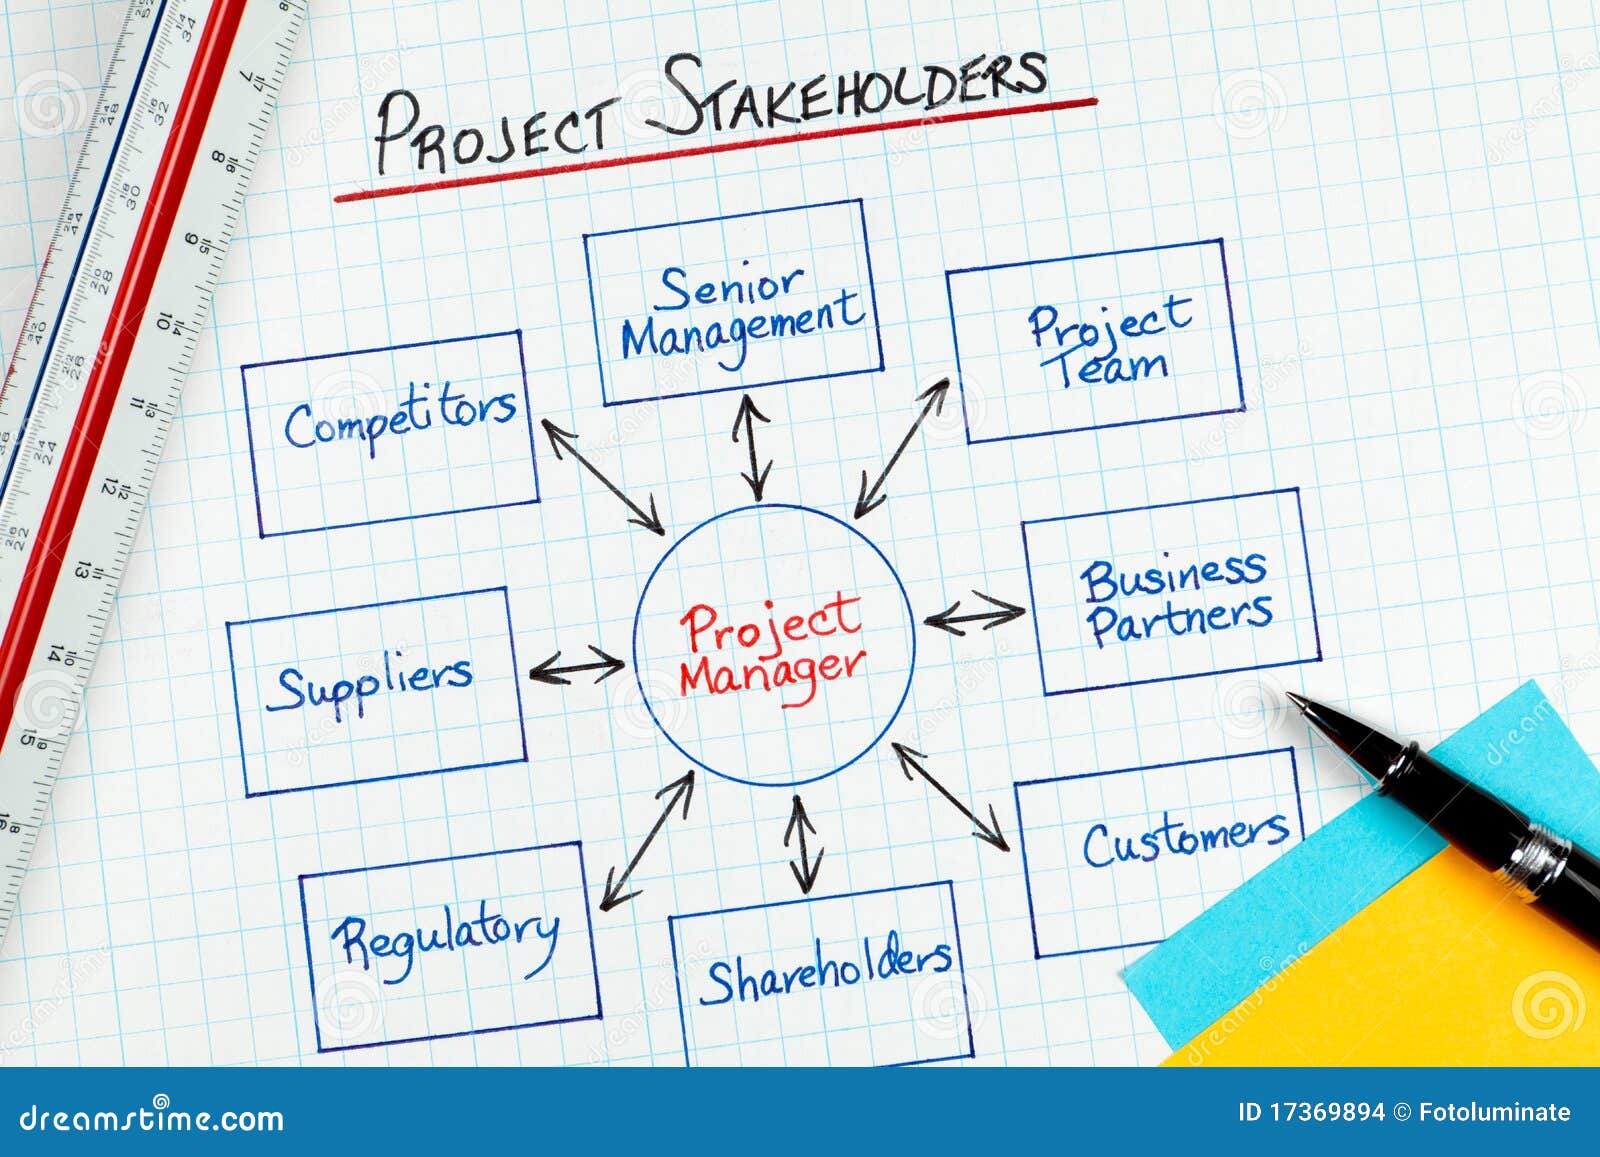 Project management team definition